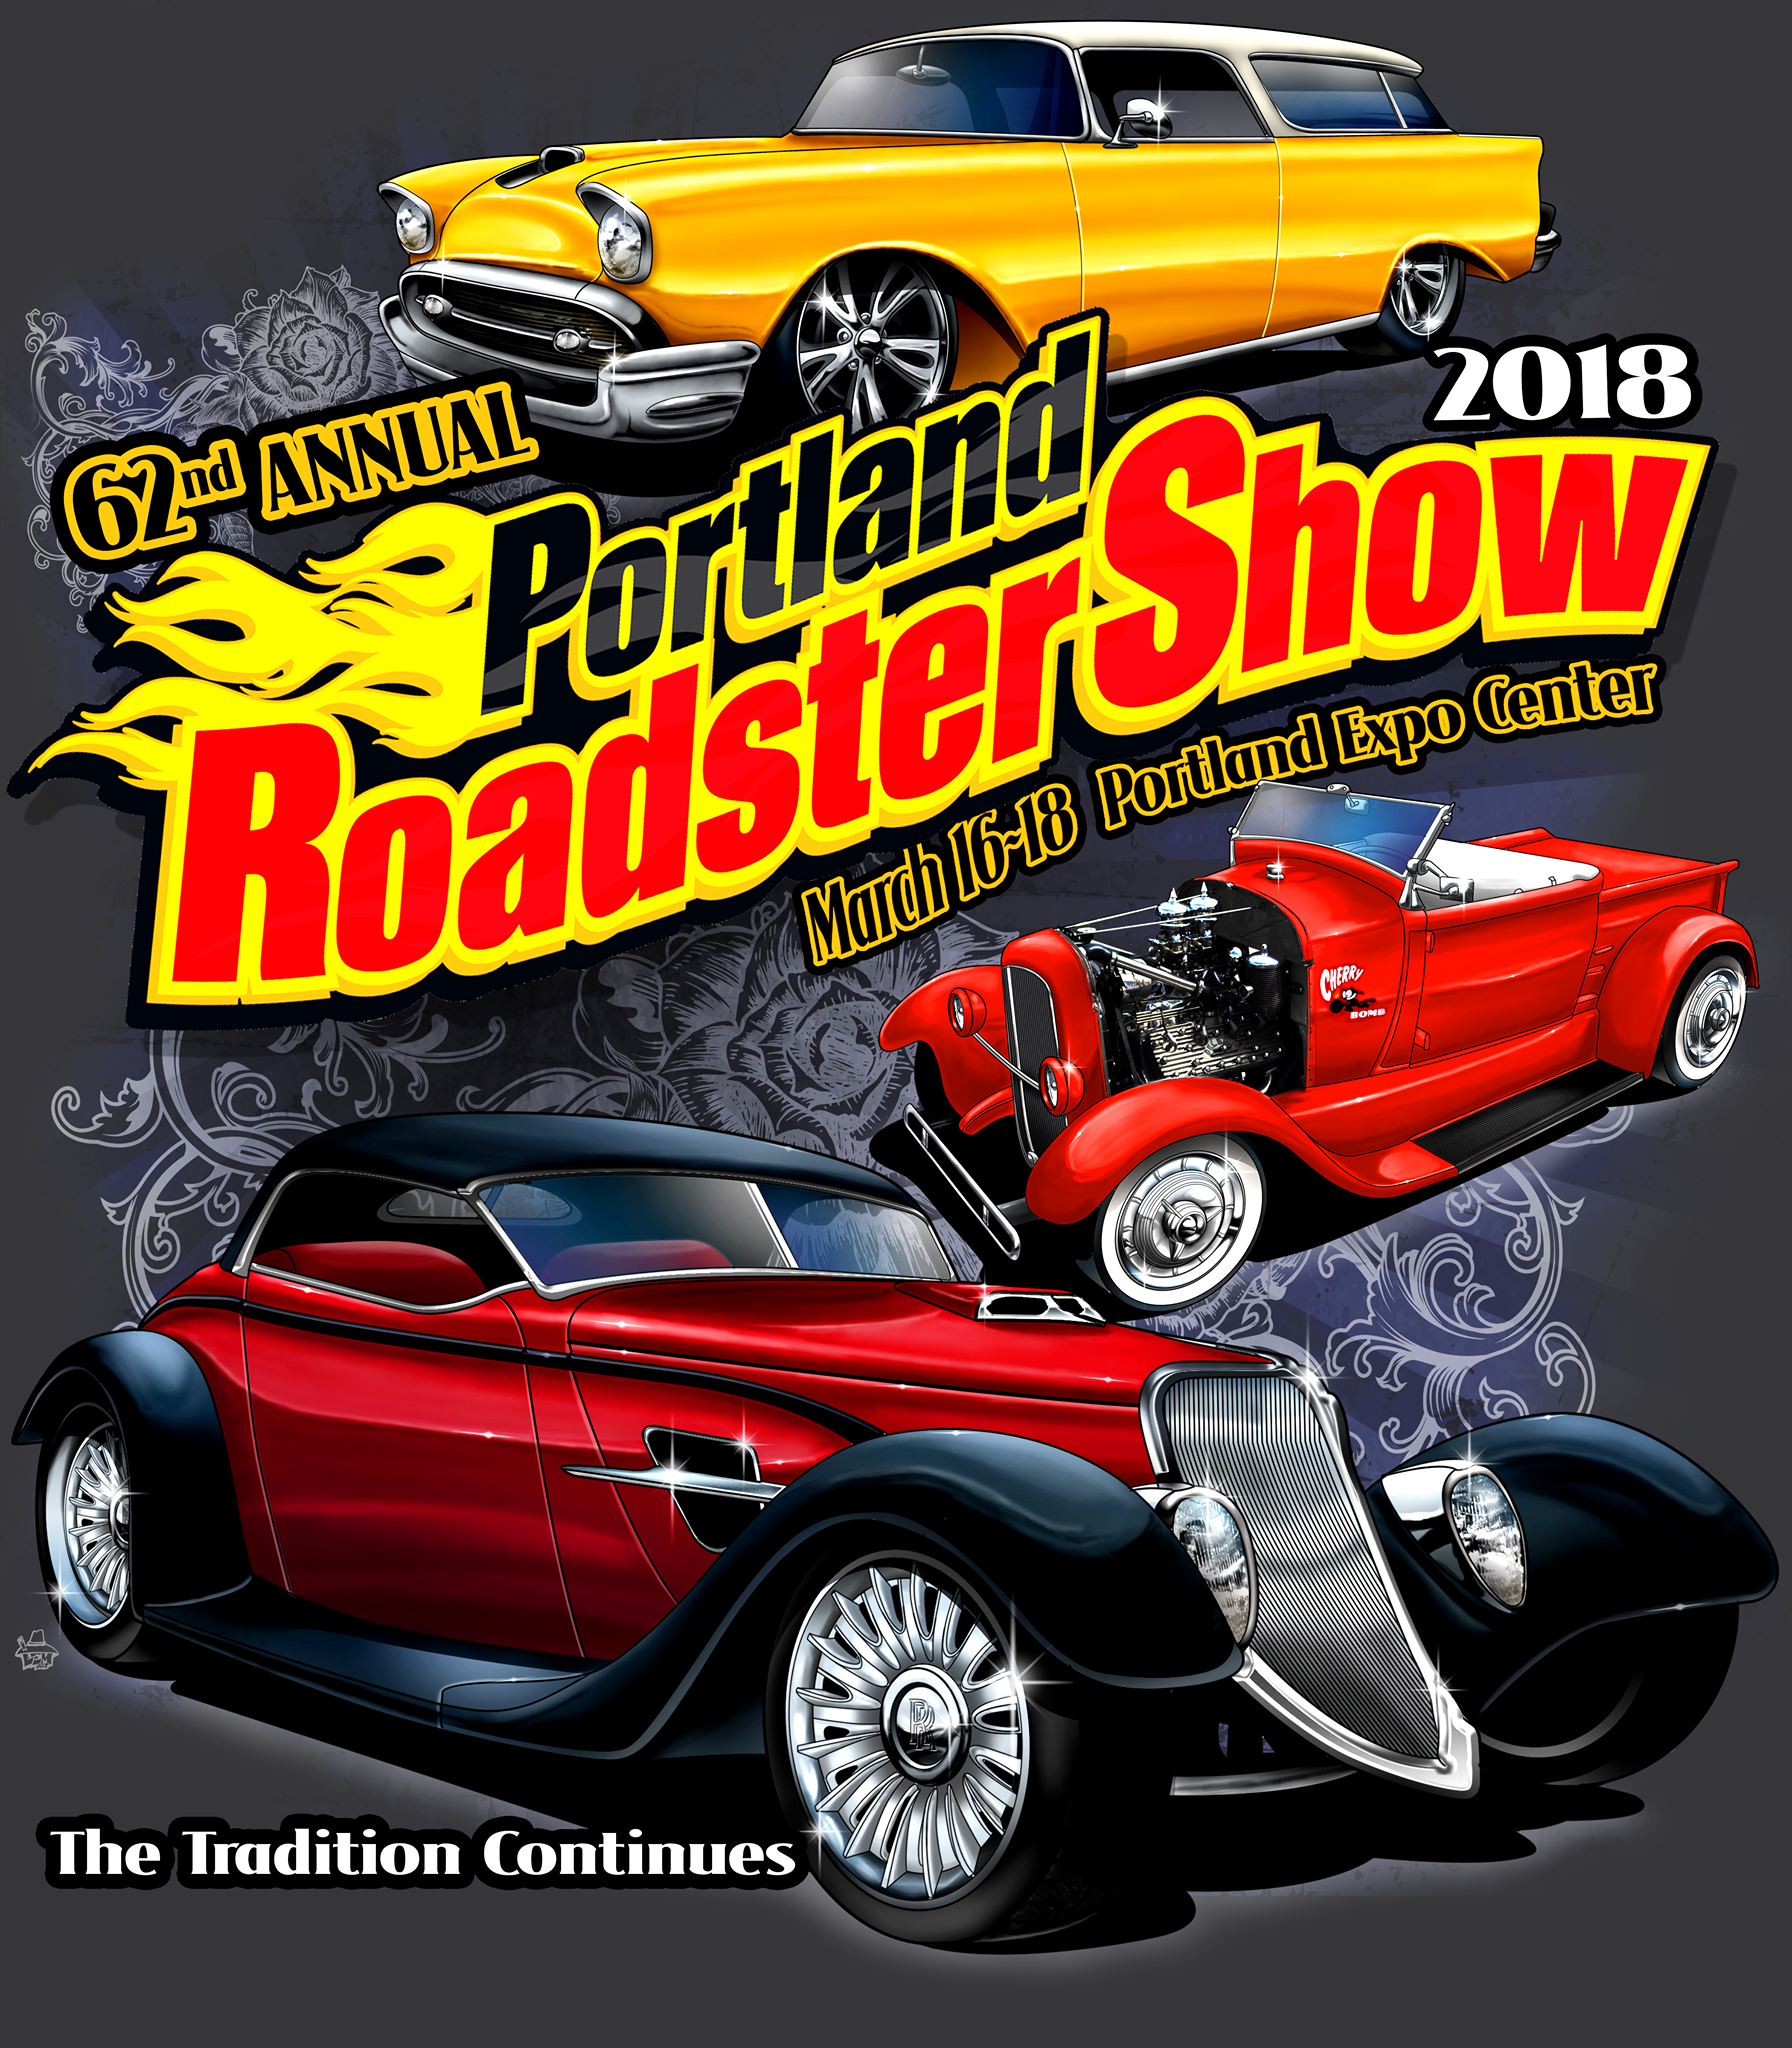 2019 Portland Roadster Show